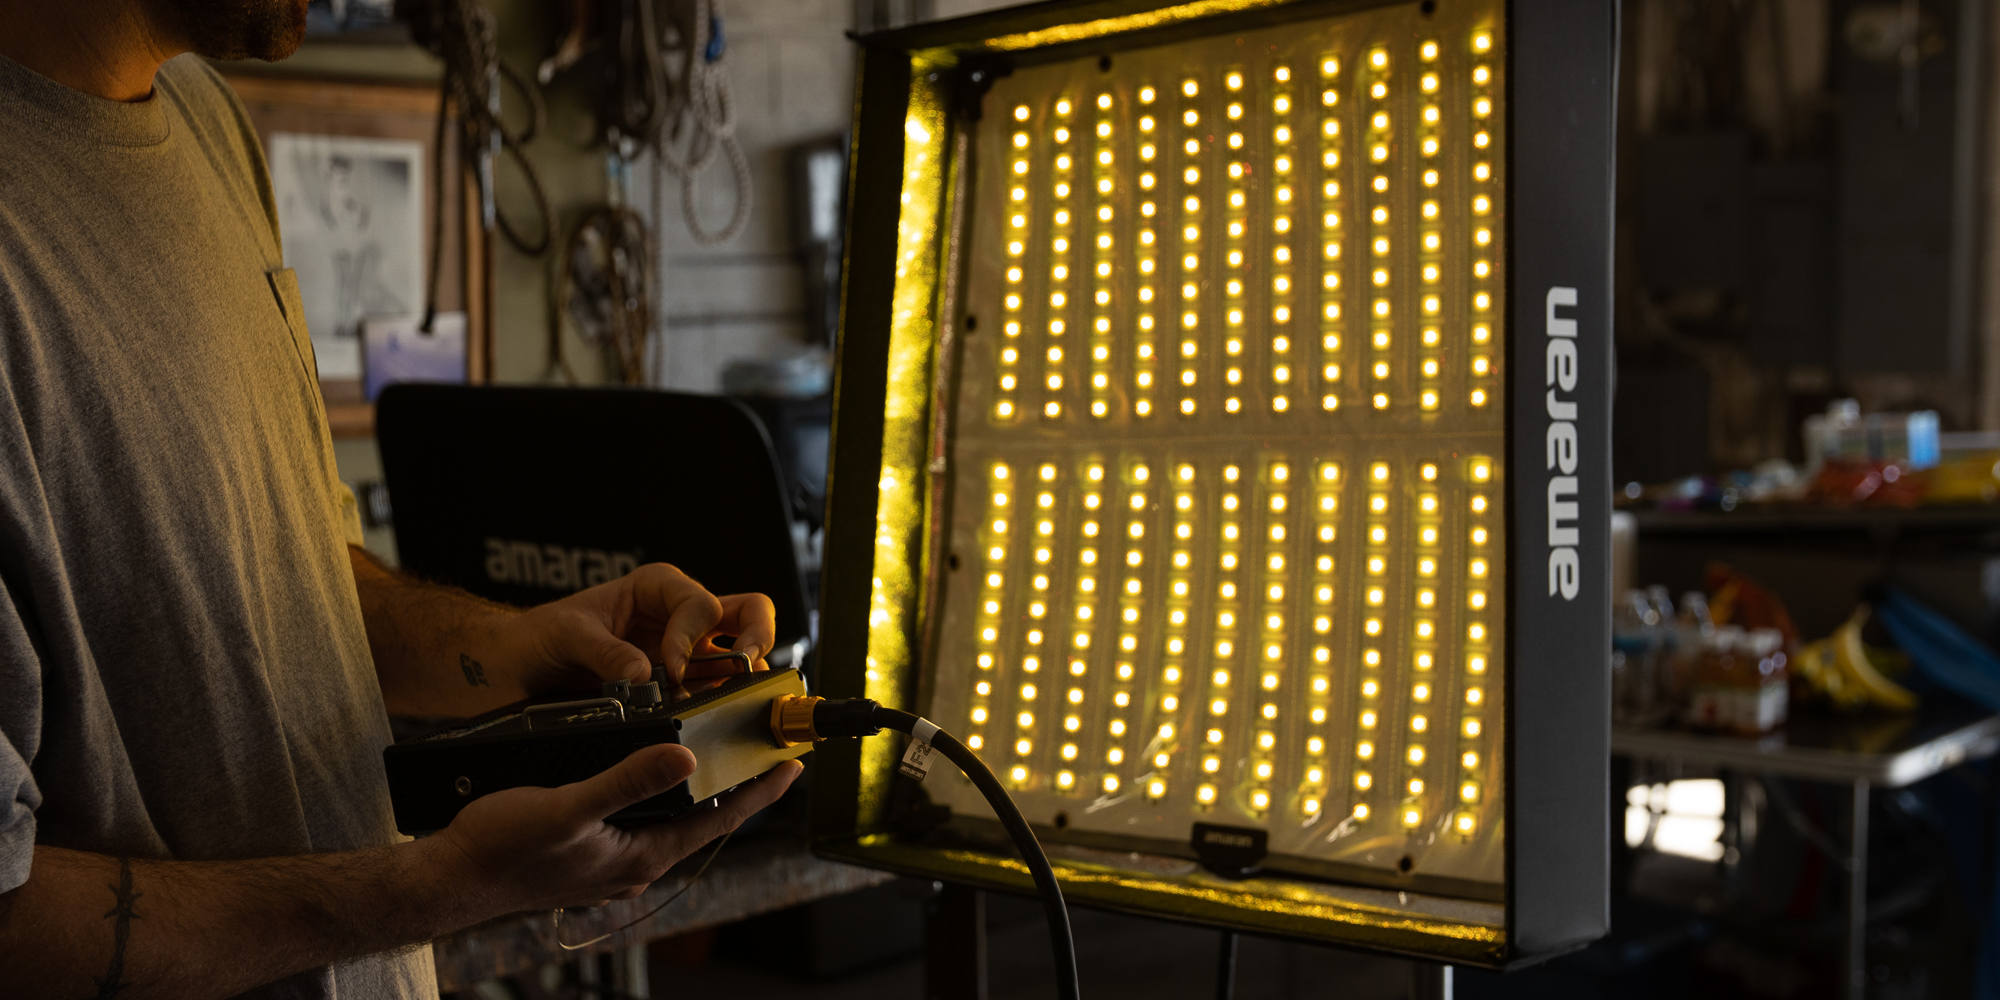 Lampa LED Amaran F22x - V-mount - Regulacja temperatury barwowej światła